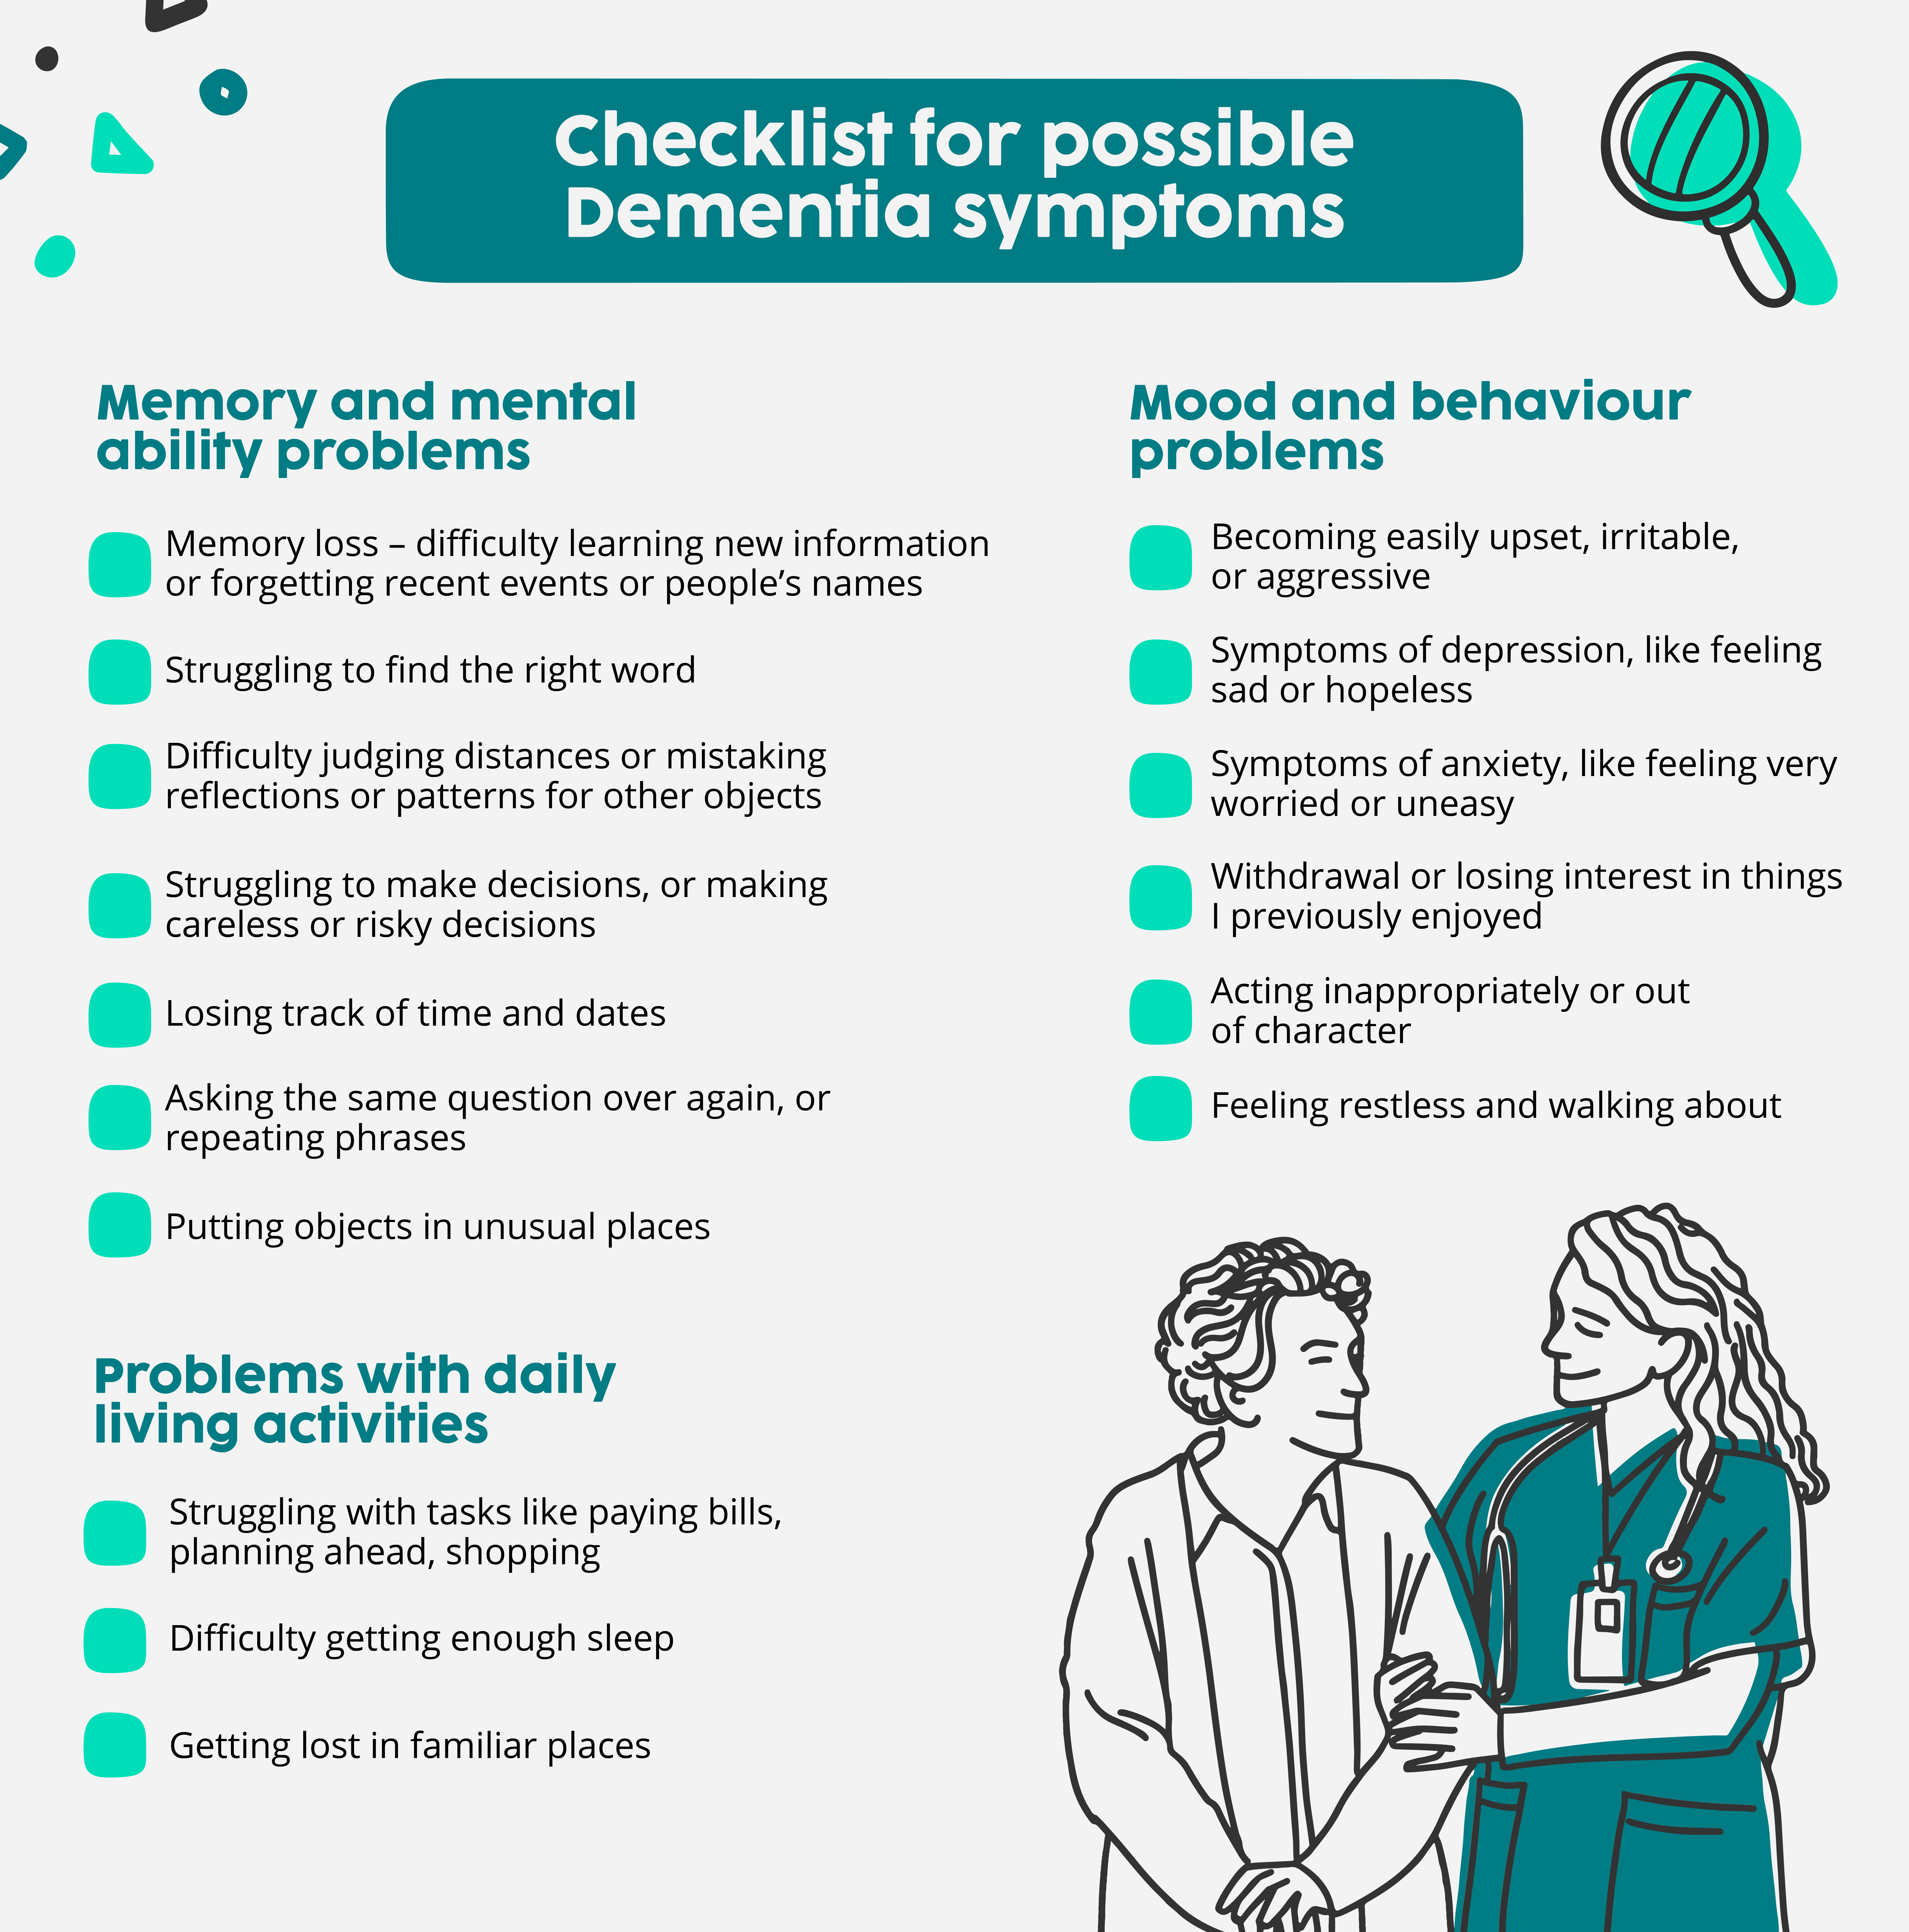 Dementia symptoms checklist